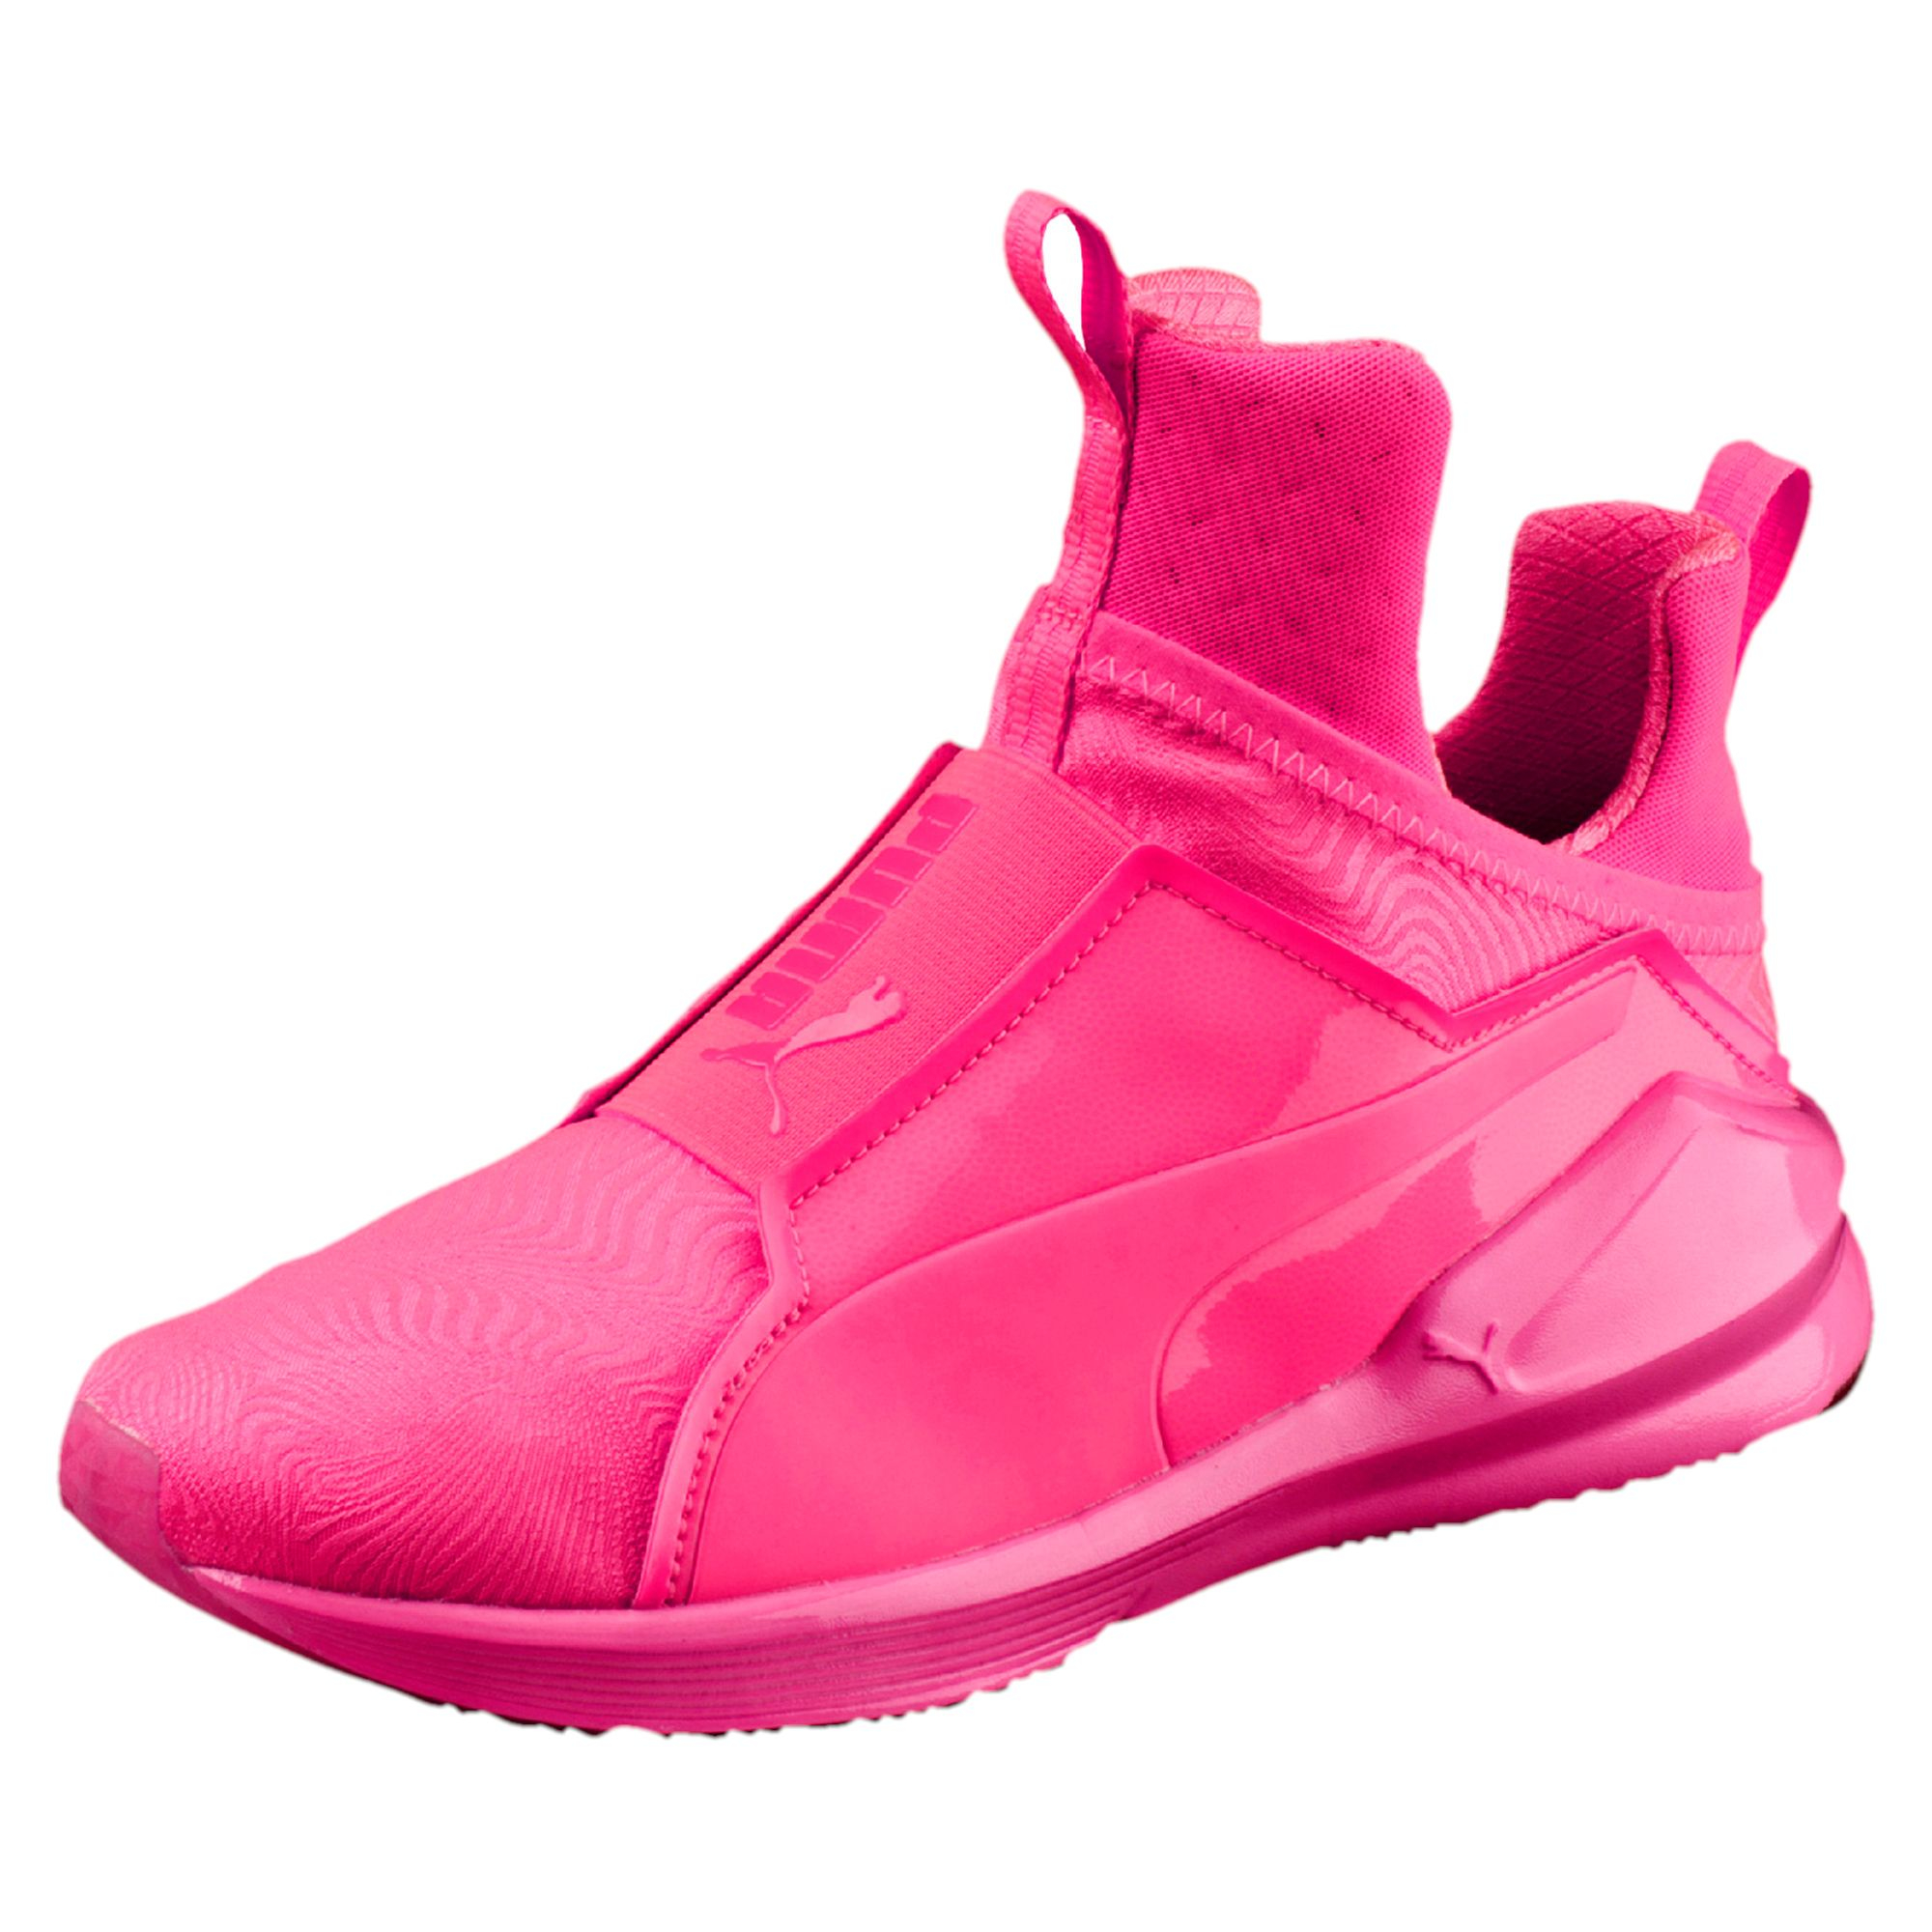 PUMA Rubber Fierce Bright Women's Training Shoes in Pink - Lyst